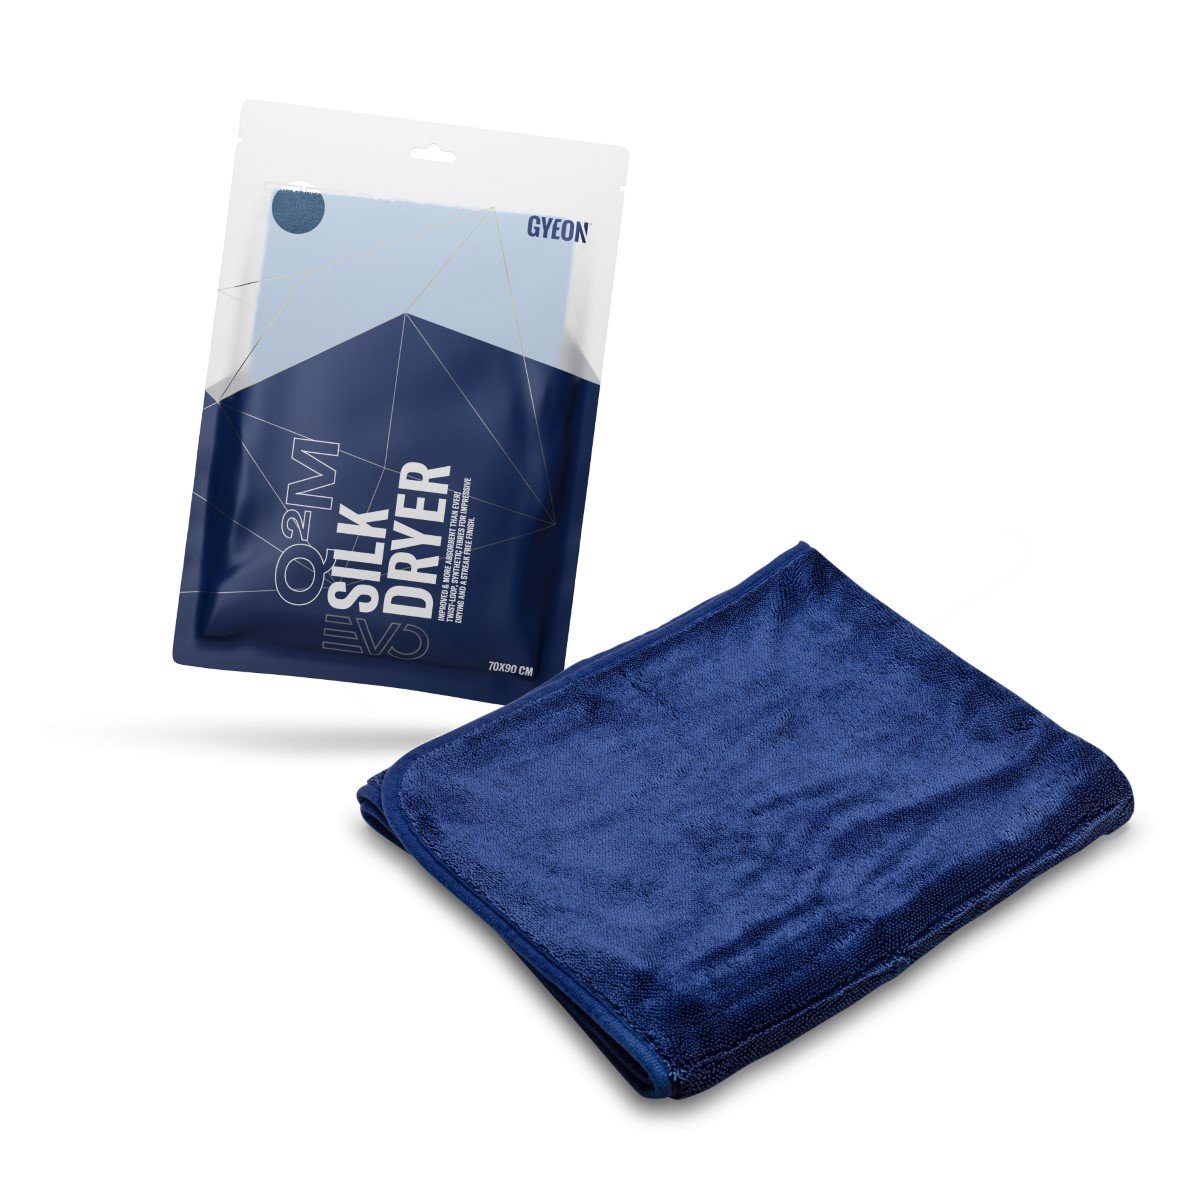 Q²M SilkDryer EVO Drying Towel - 70x90cm